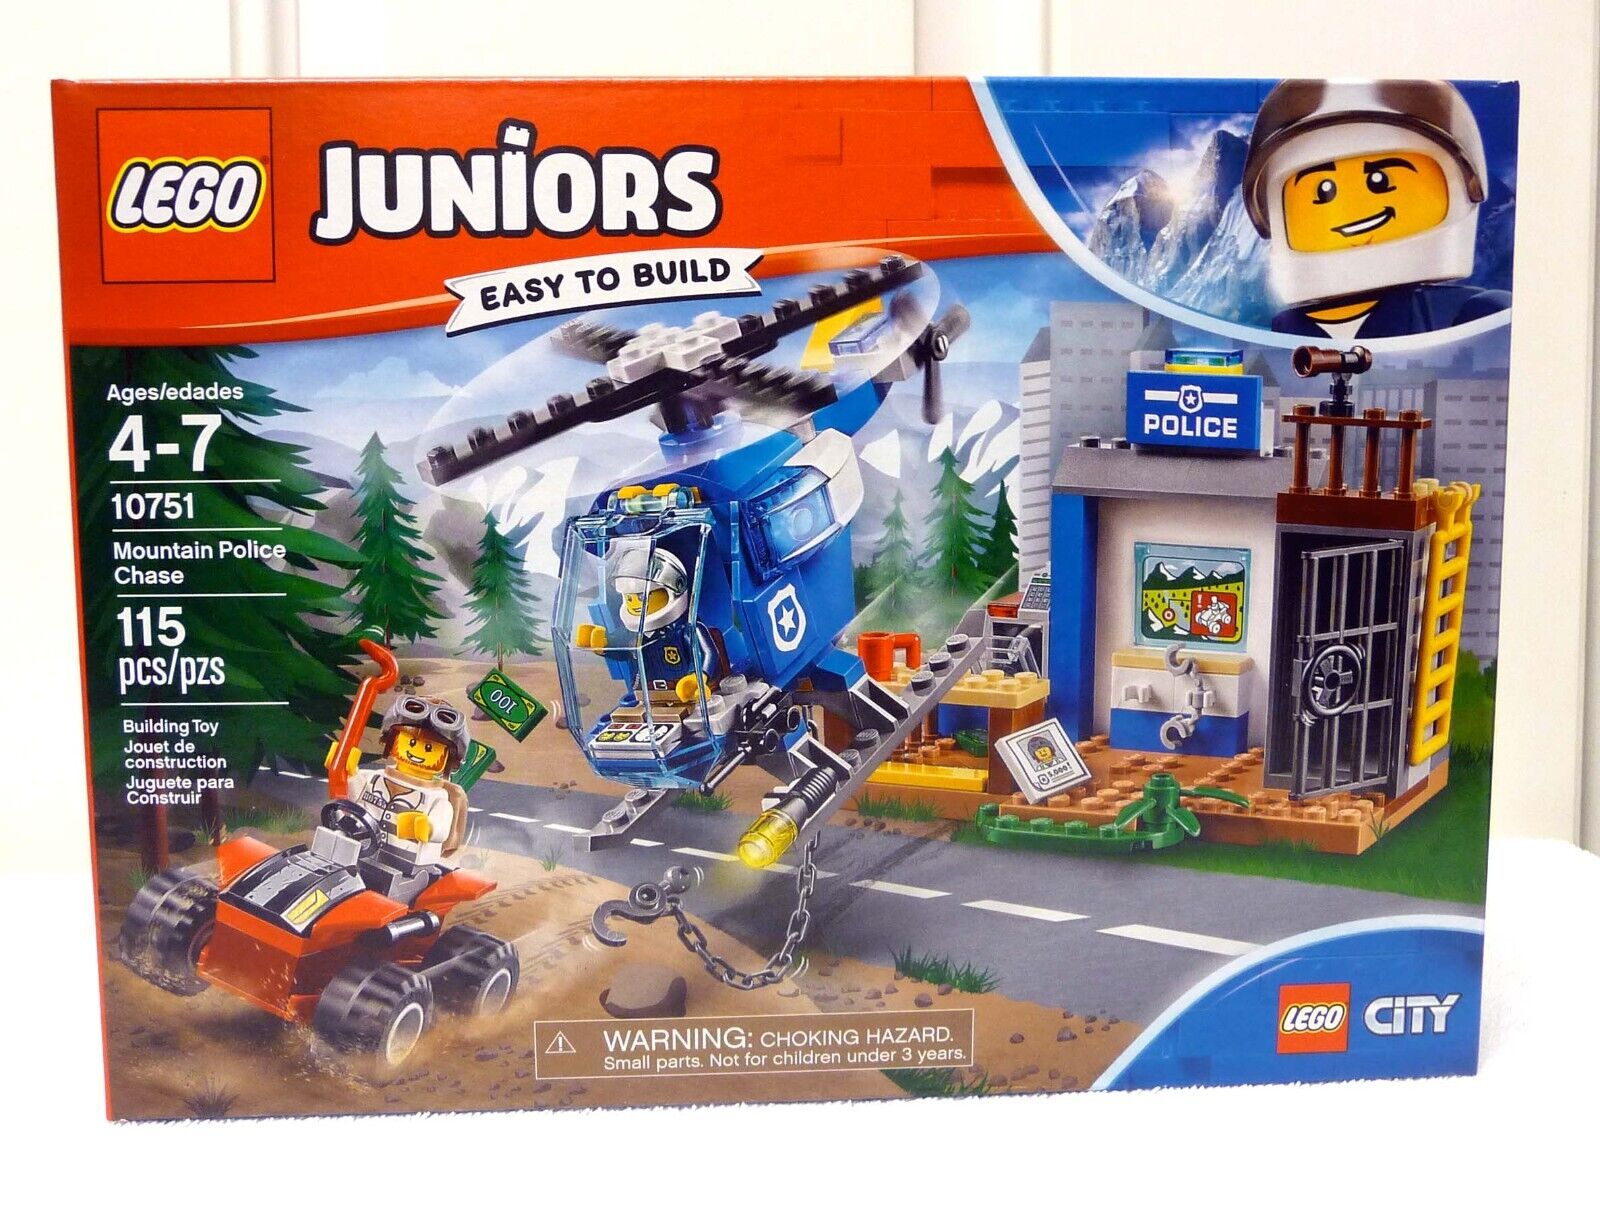 Lego 10751 - City - Mountain Police Chase -Juniors Easy to Build NIB -1 Day Ship